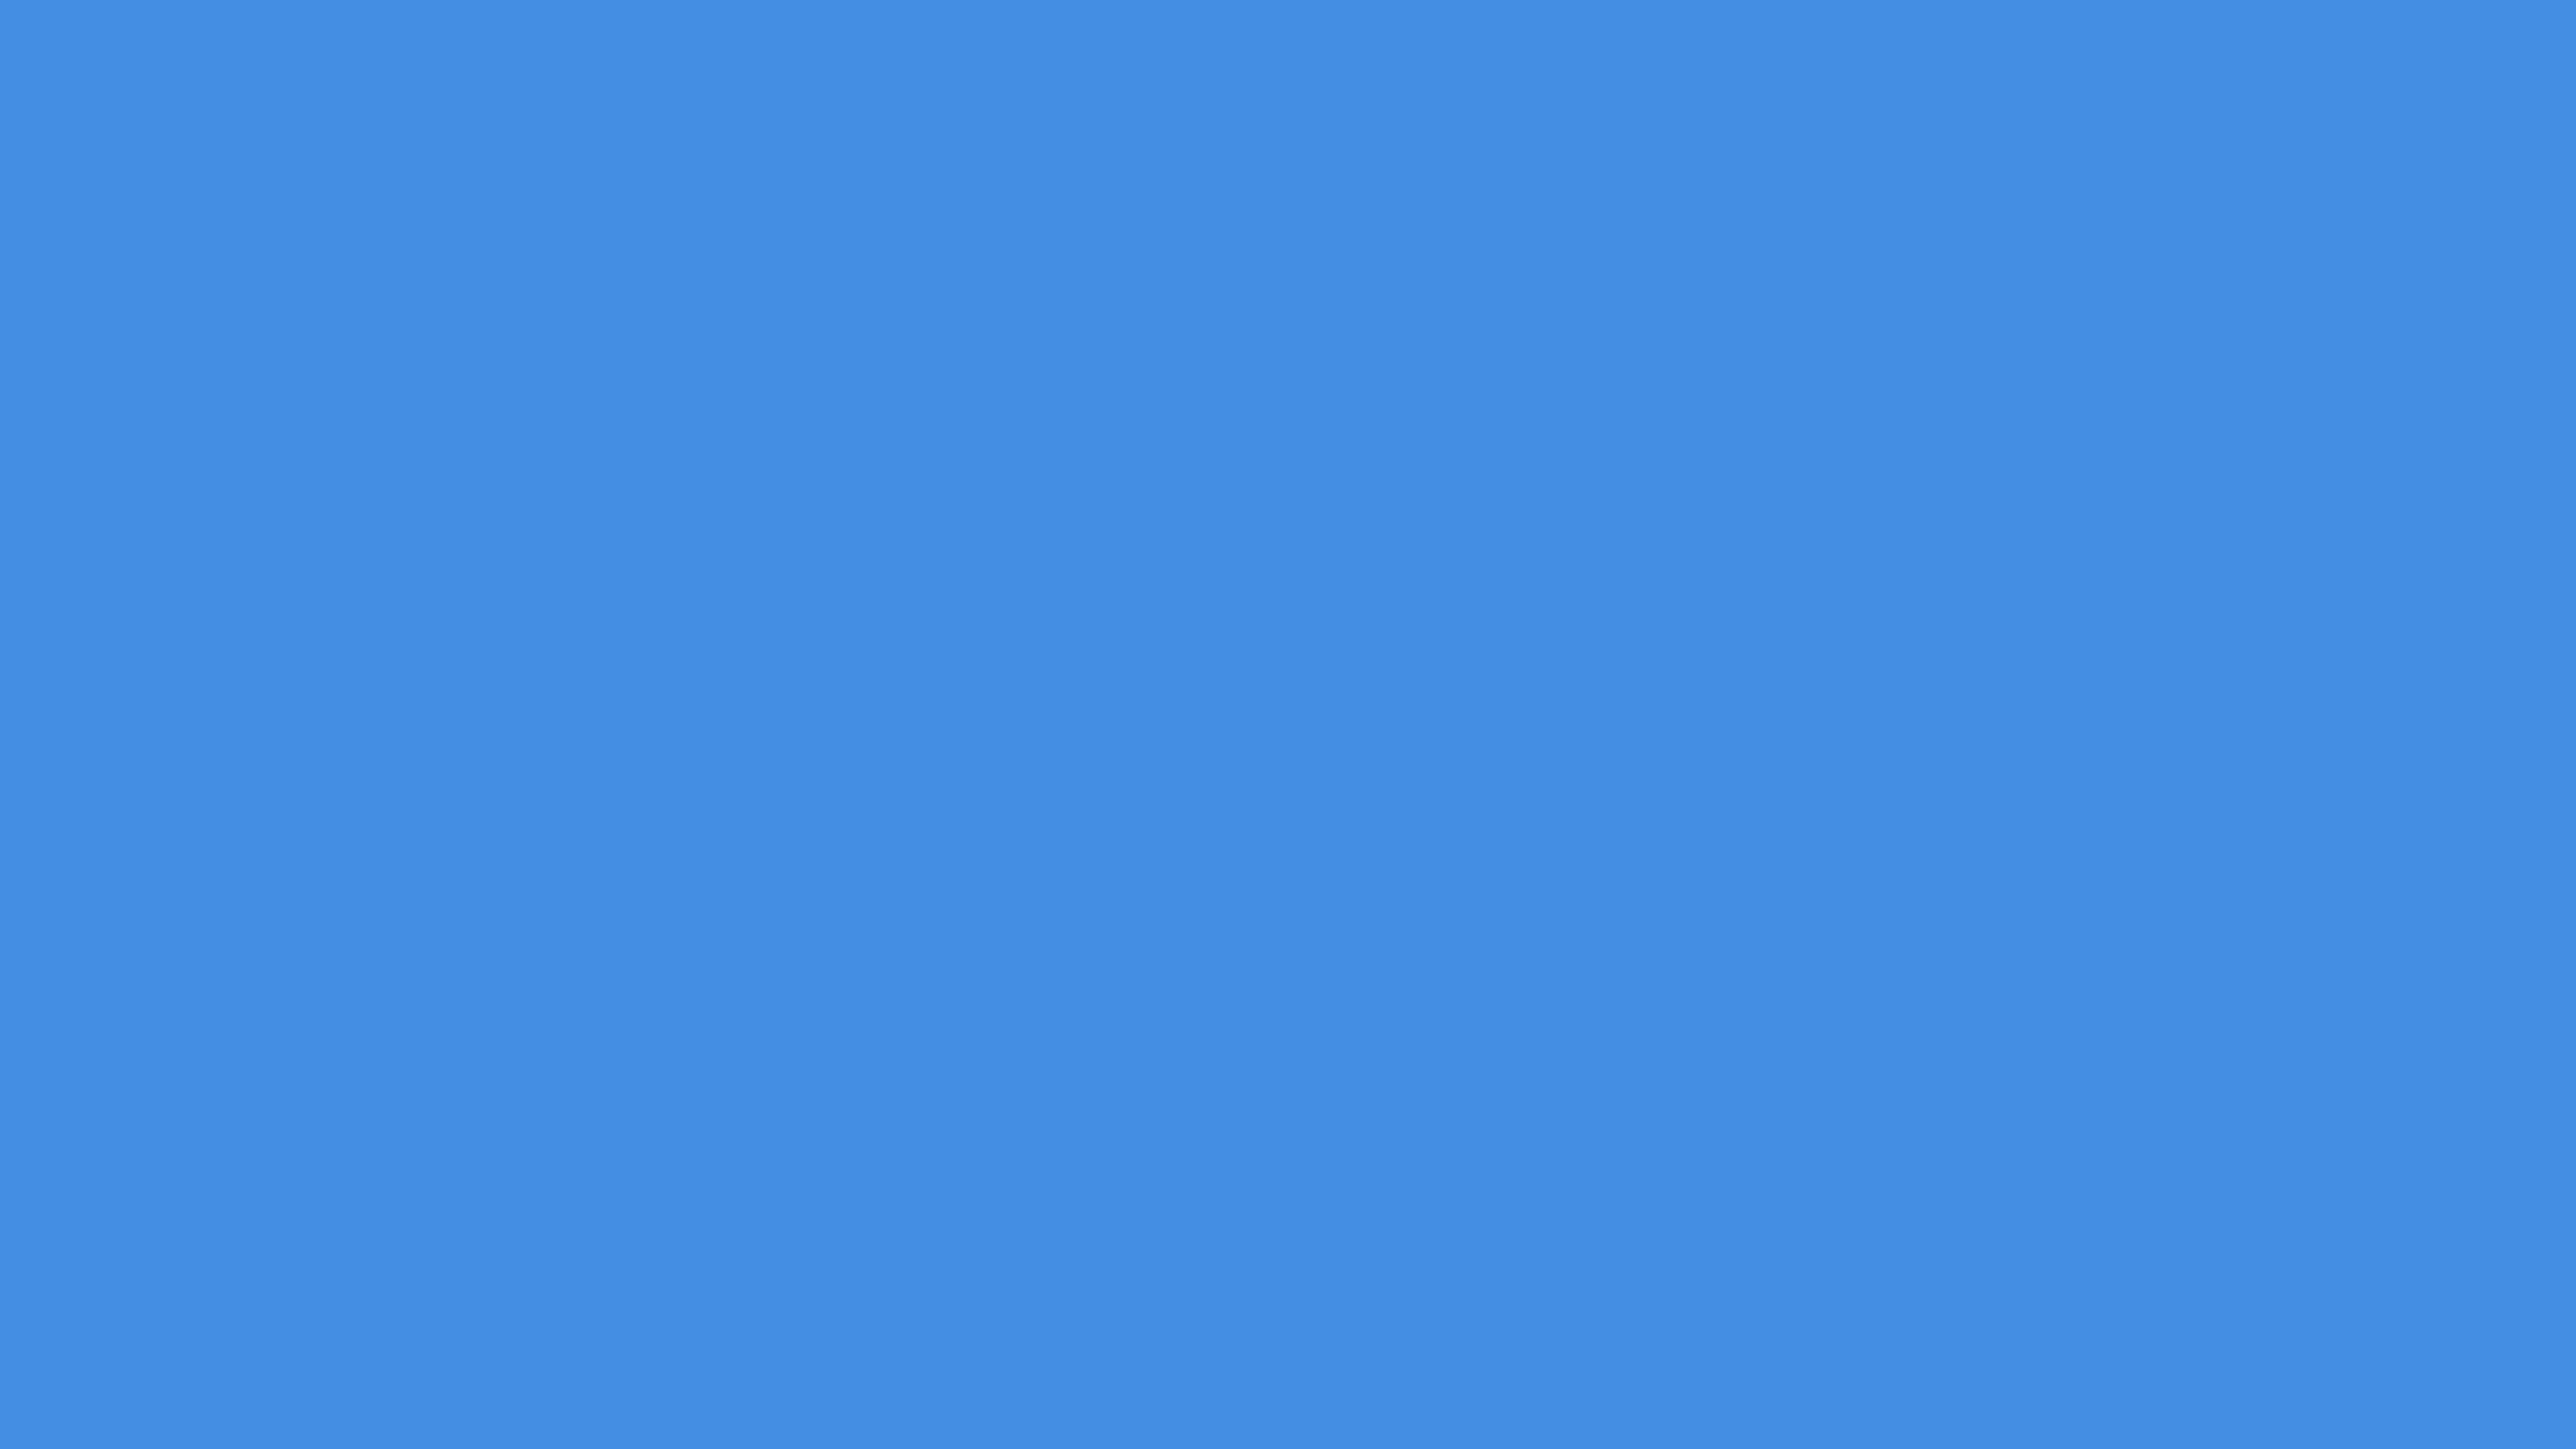 Dark Sky Blue Solid Color Background Image | Free Image Generator